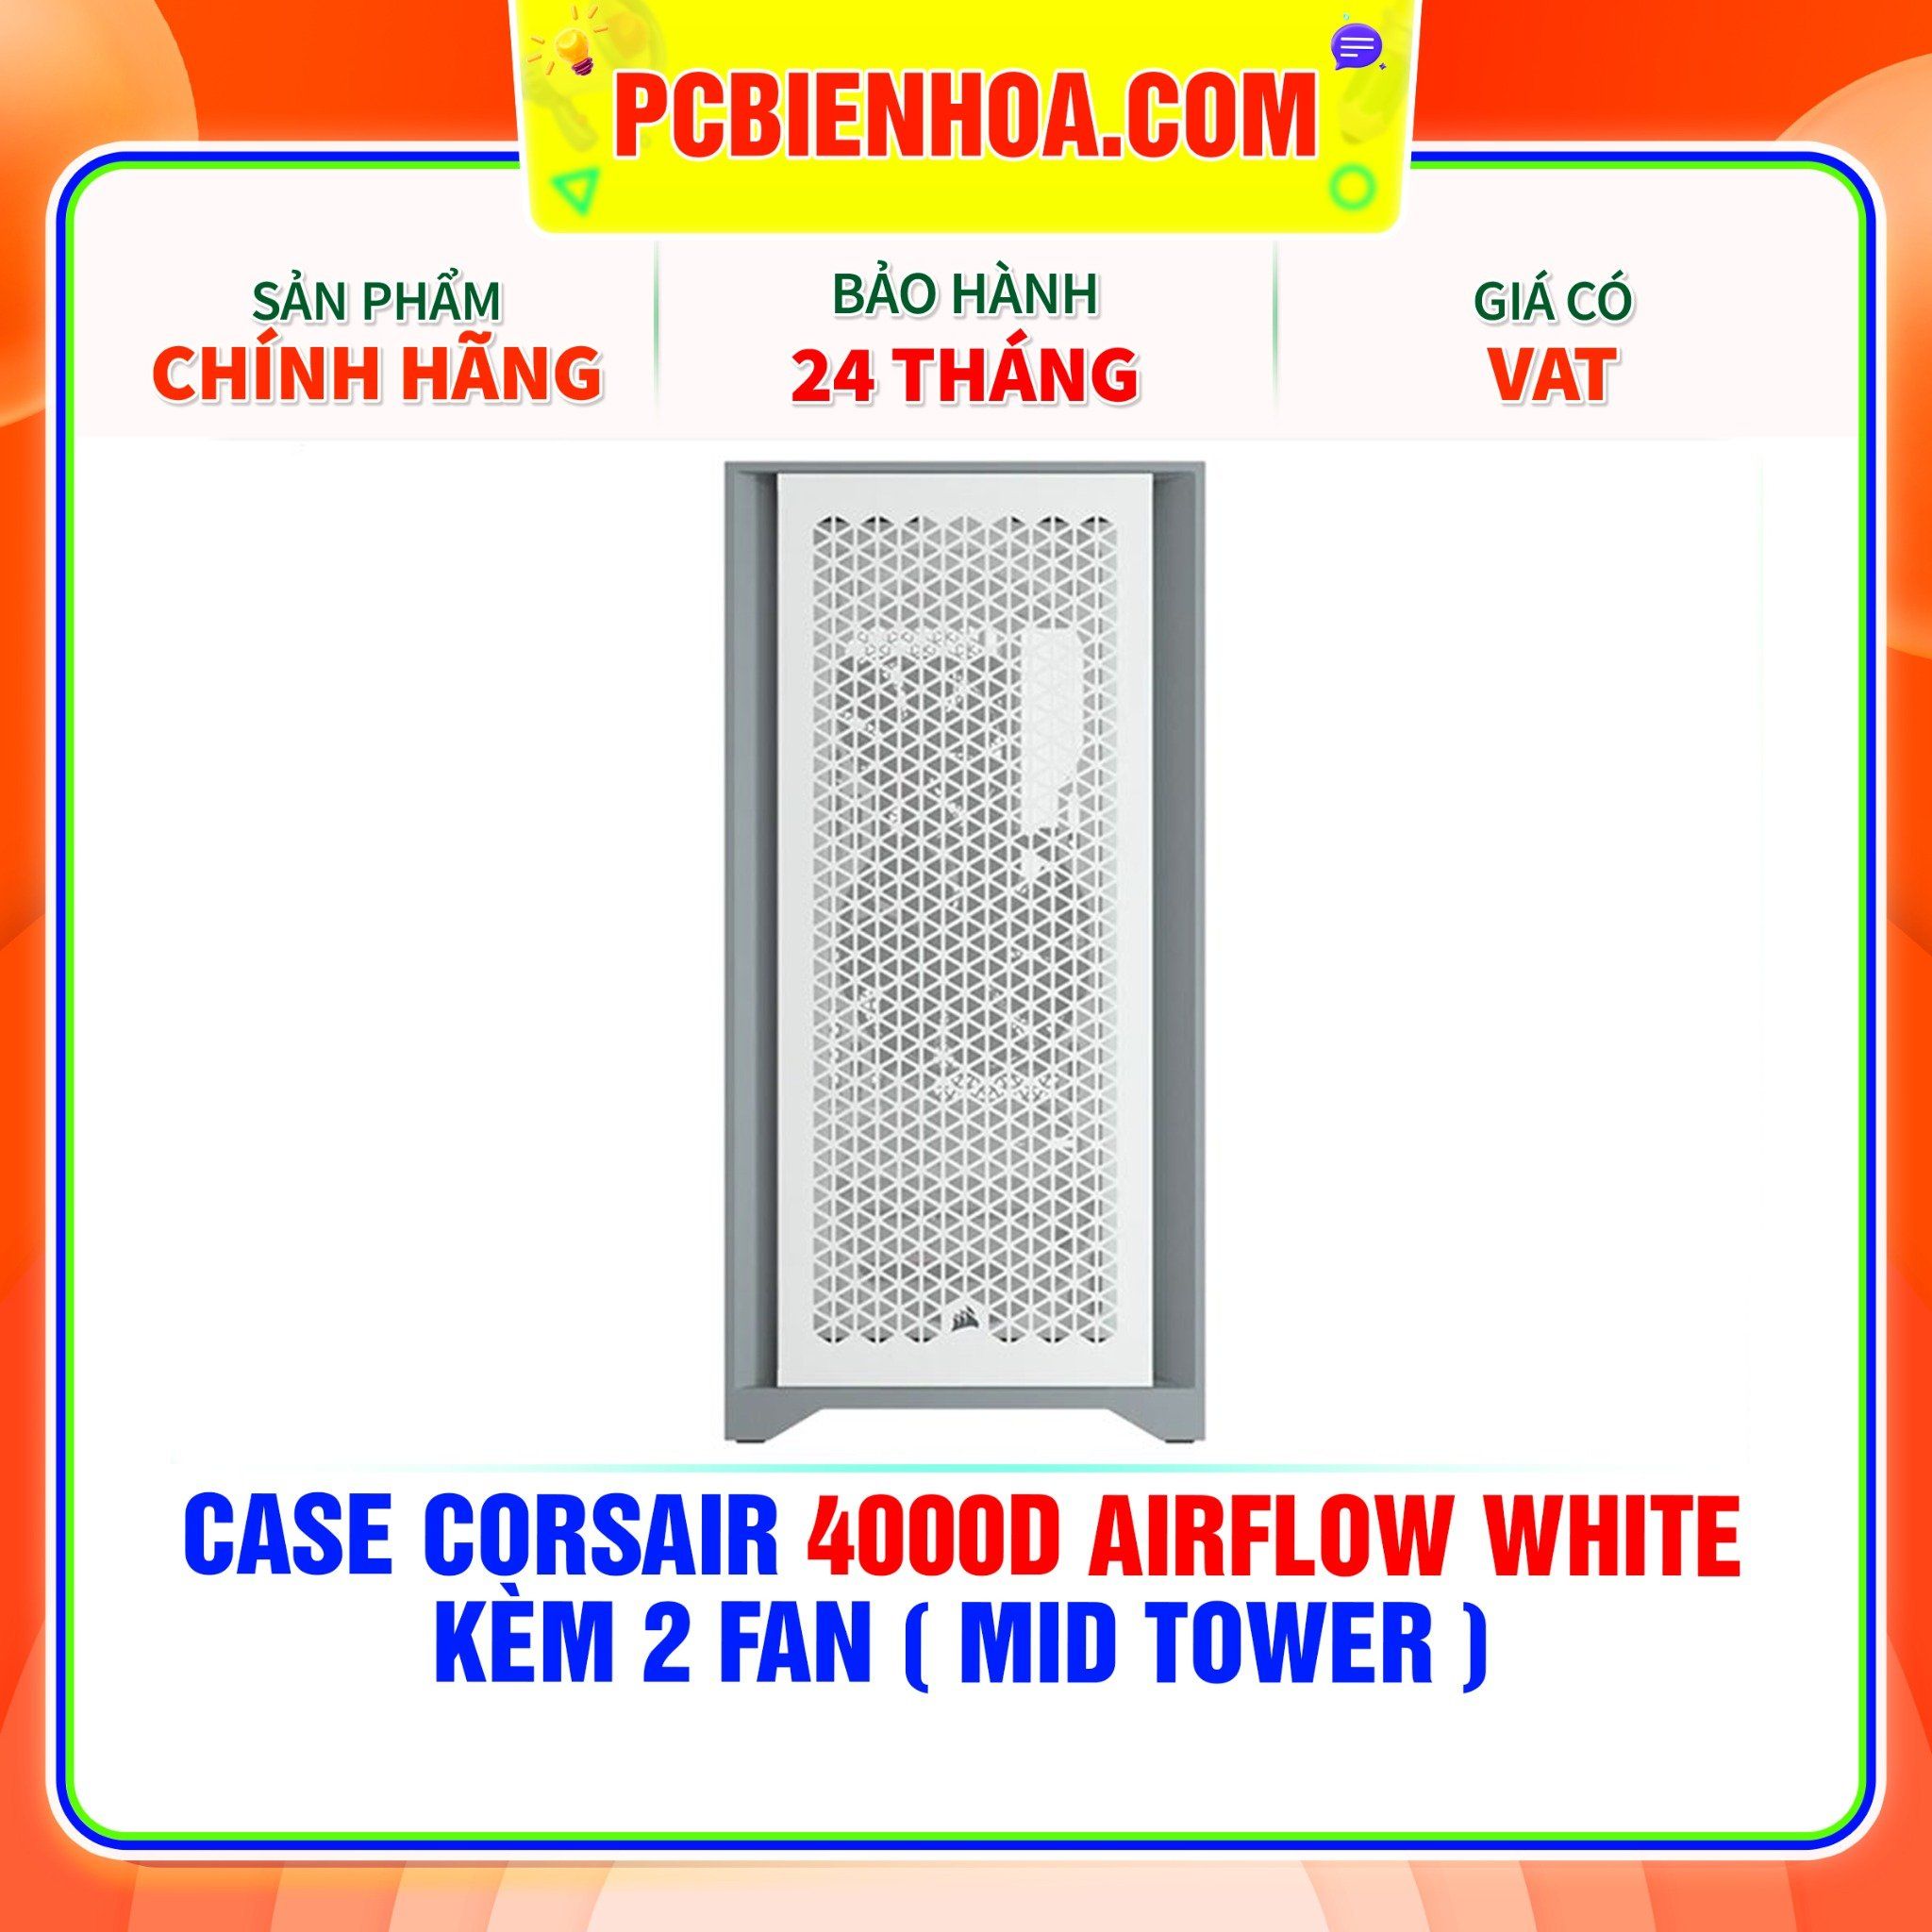  CASE CORSAIR 4000D AIRFLOW WHITE - KÈM 2 FAN ( MID TOWER ) 